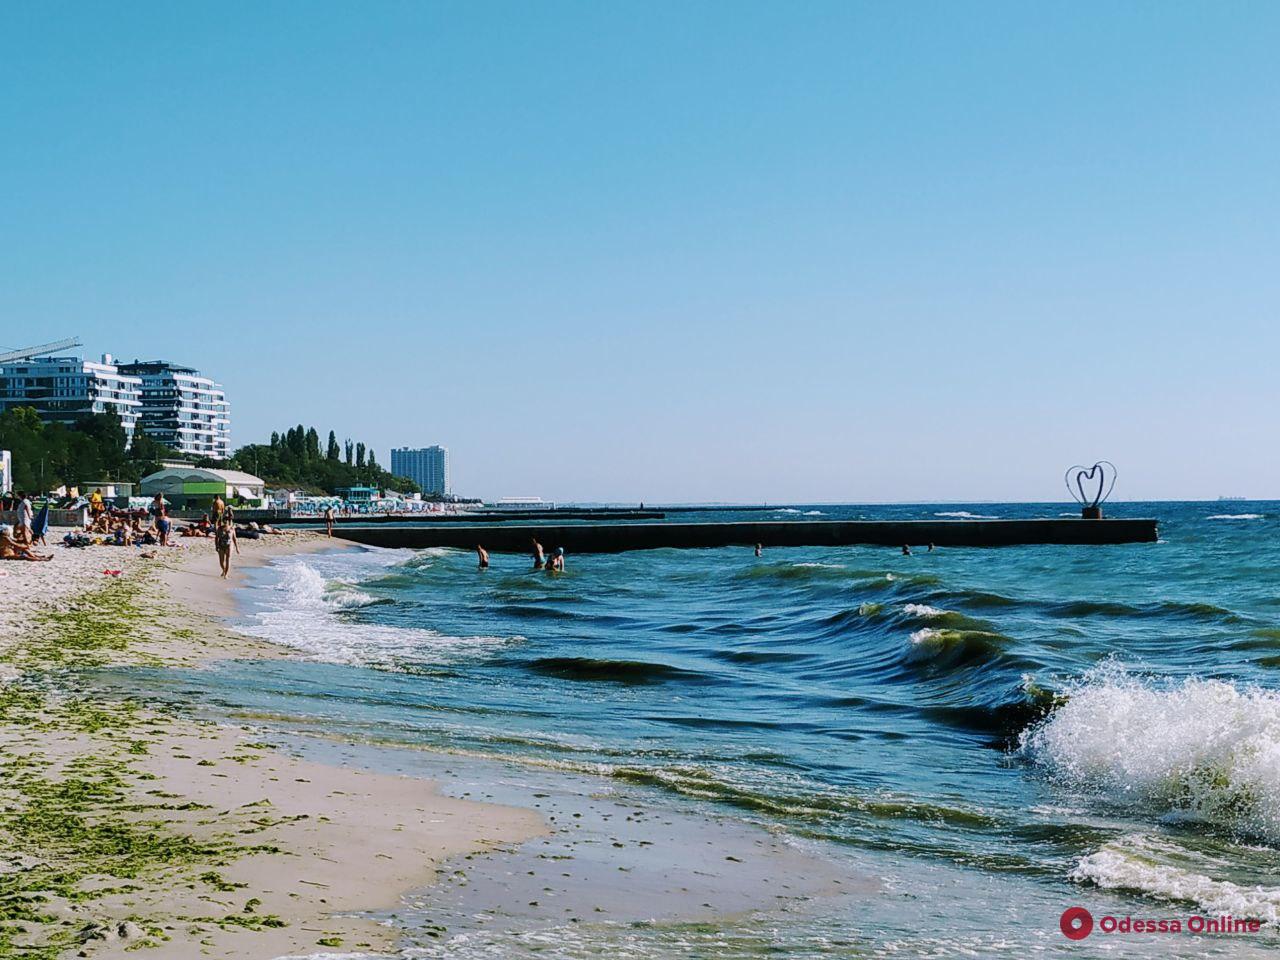 Odessa beach has become a platform for an unusual art installation (photo)